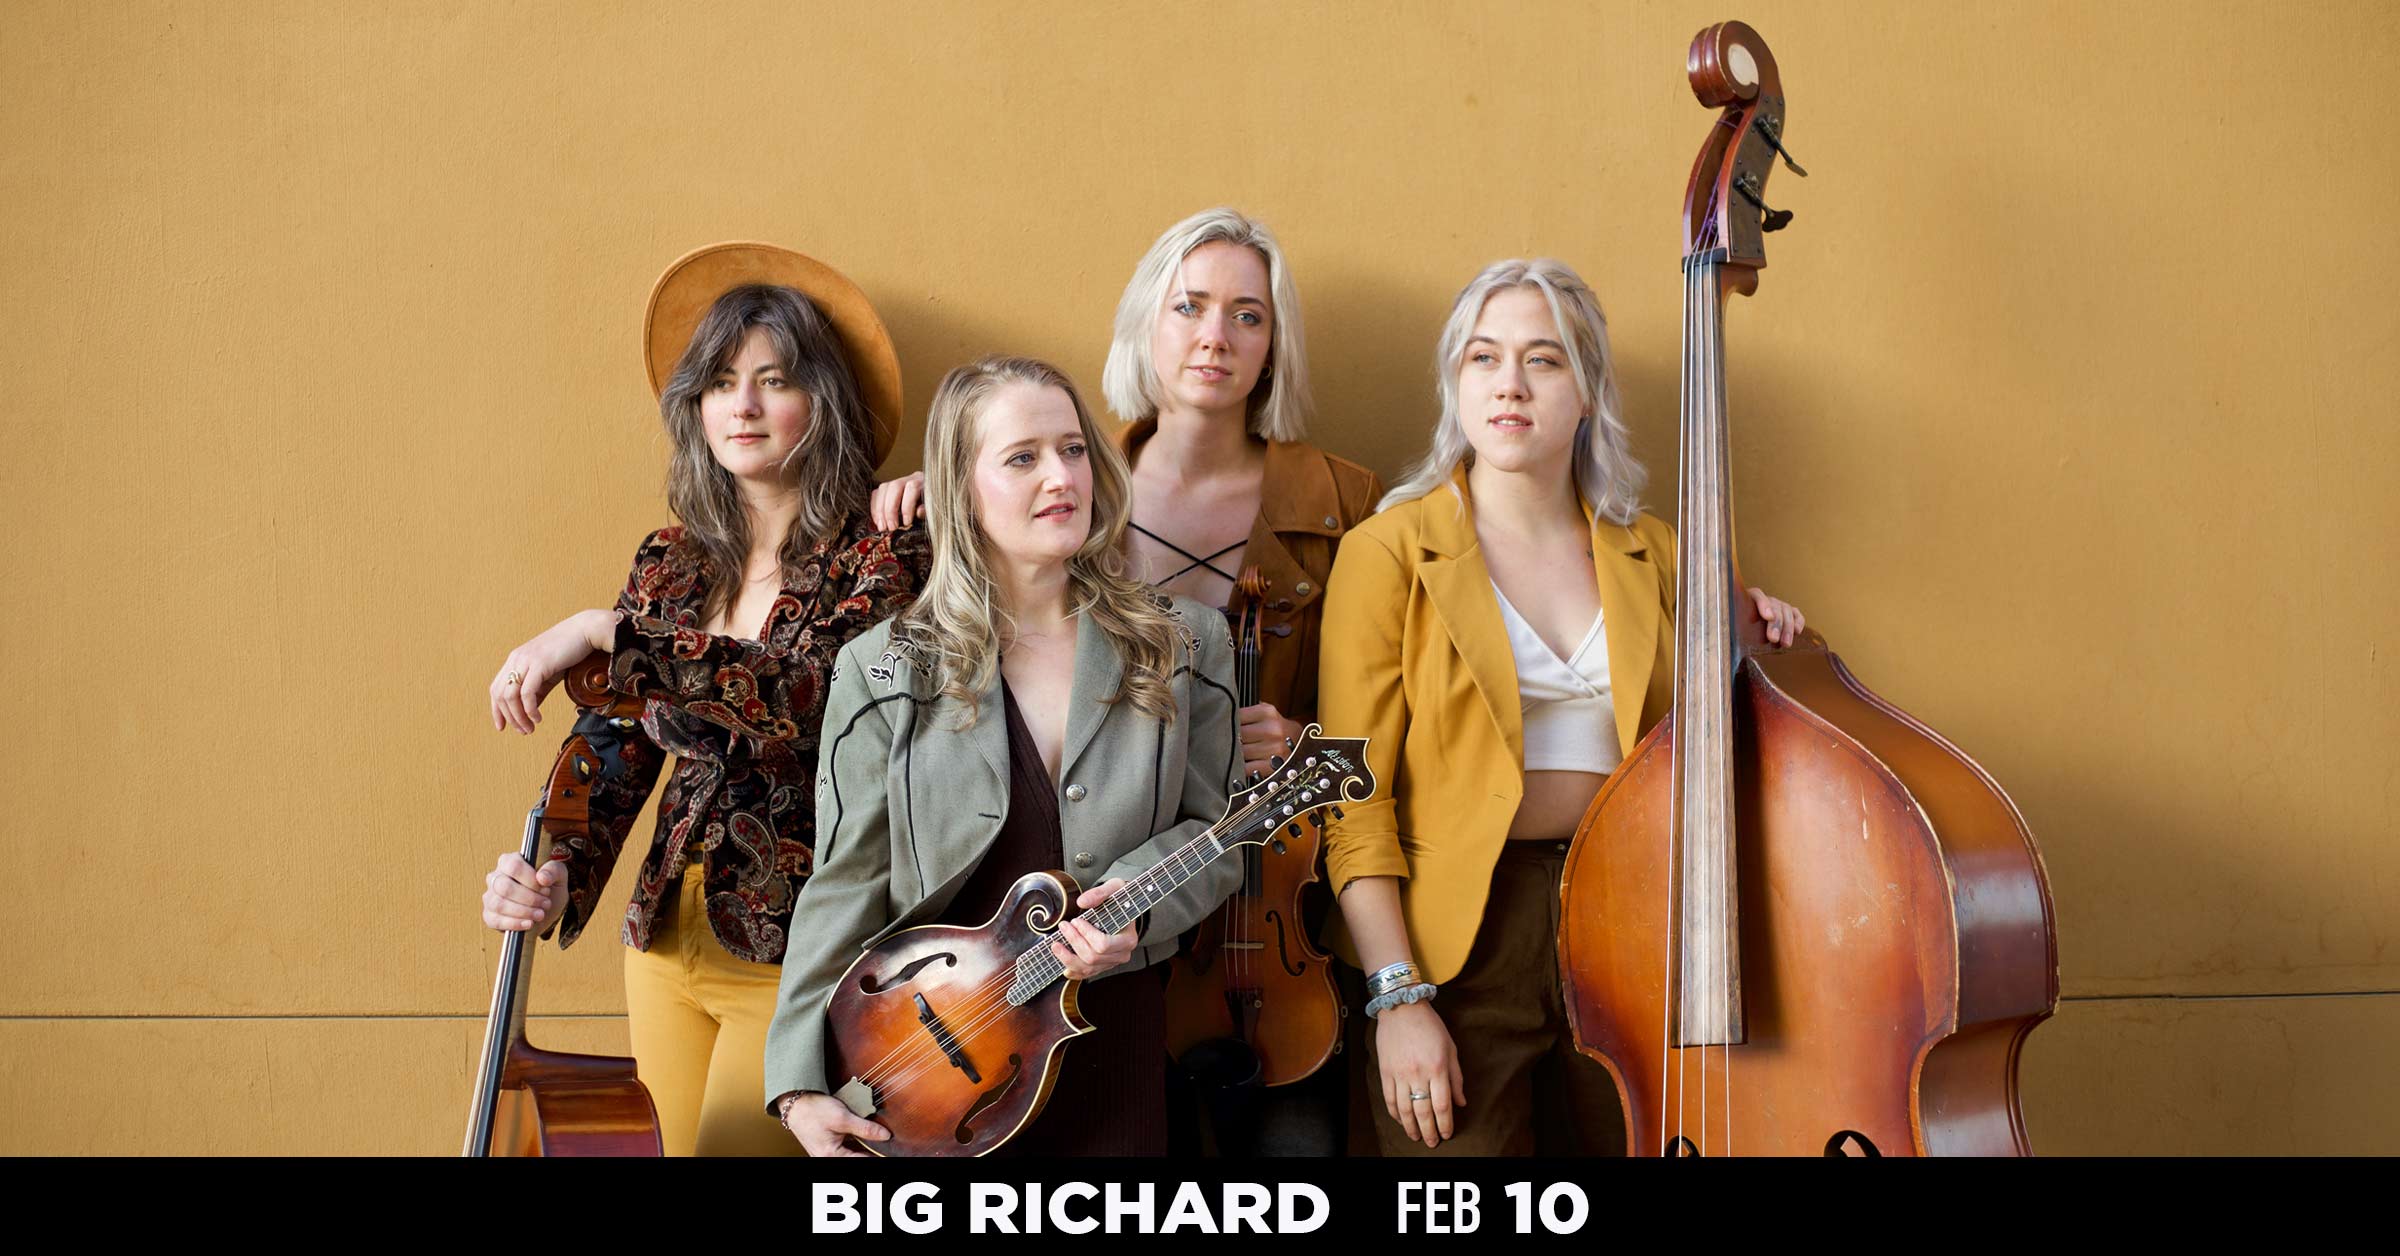 Big Richard - Feb 10